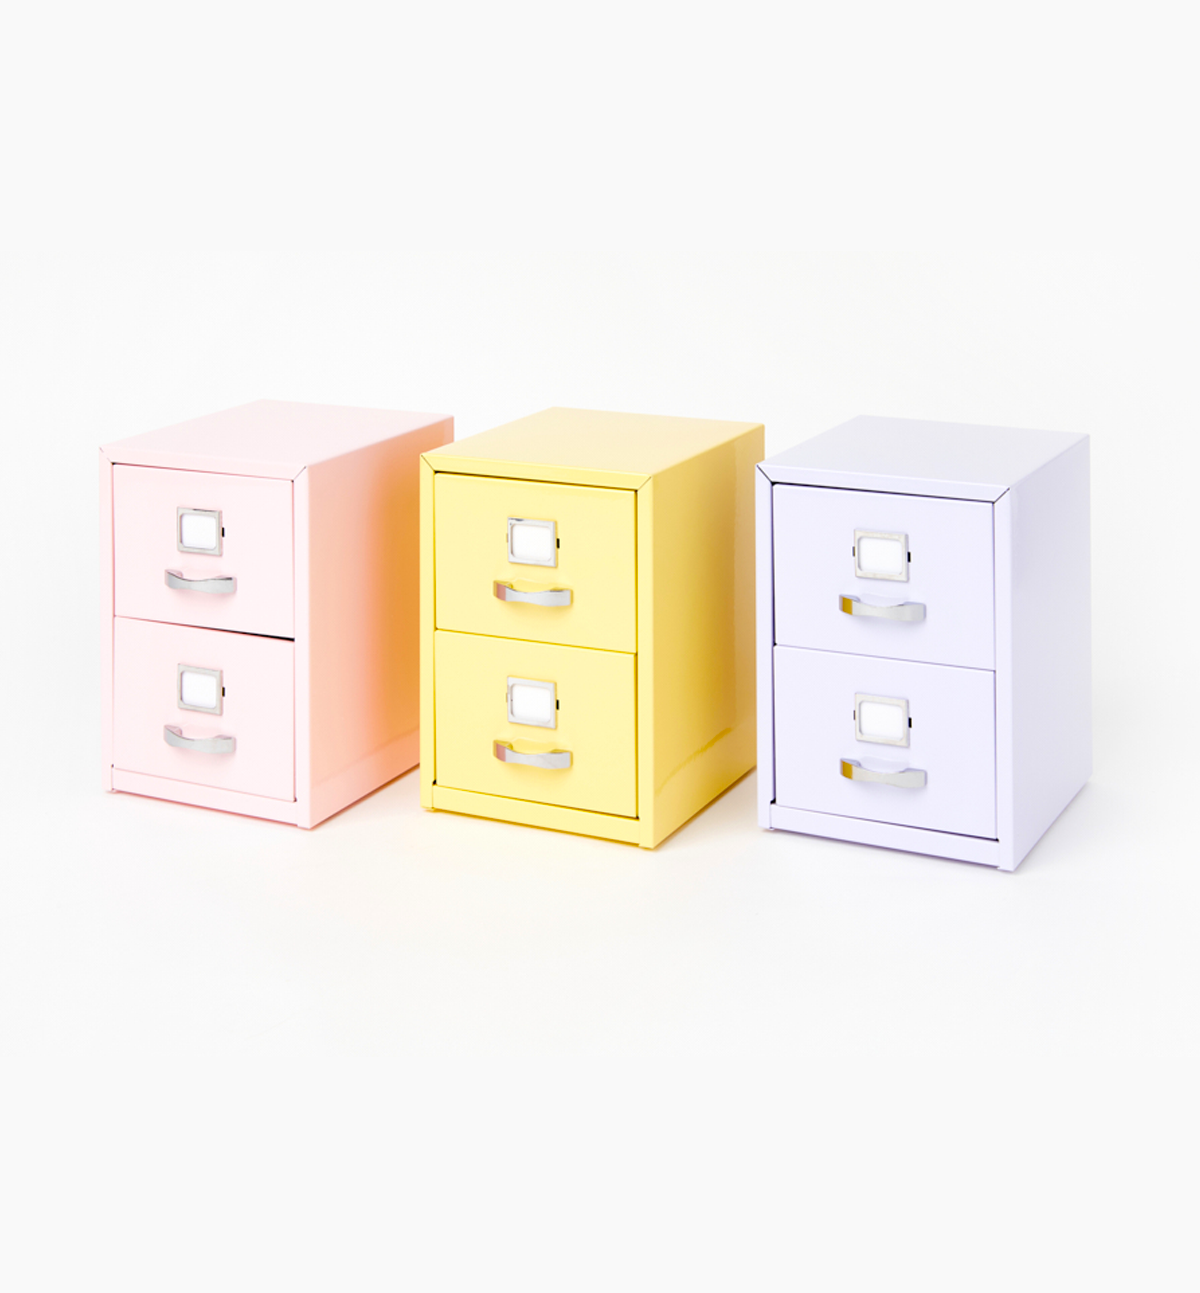 Mini Cabinet Drawer [Yellow]